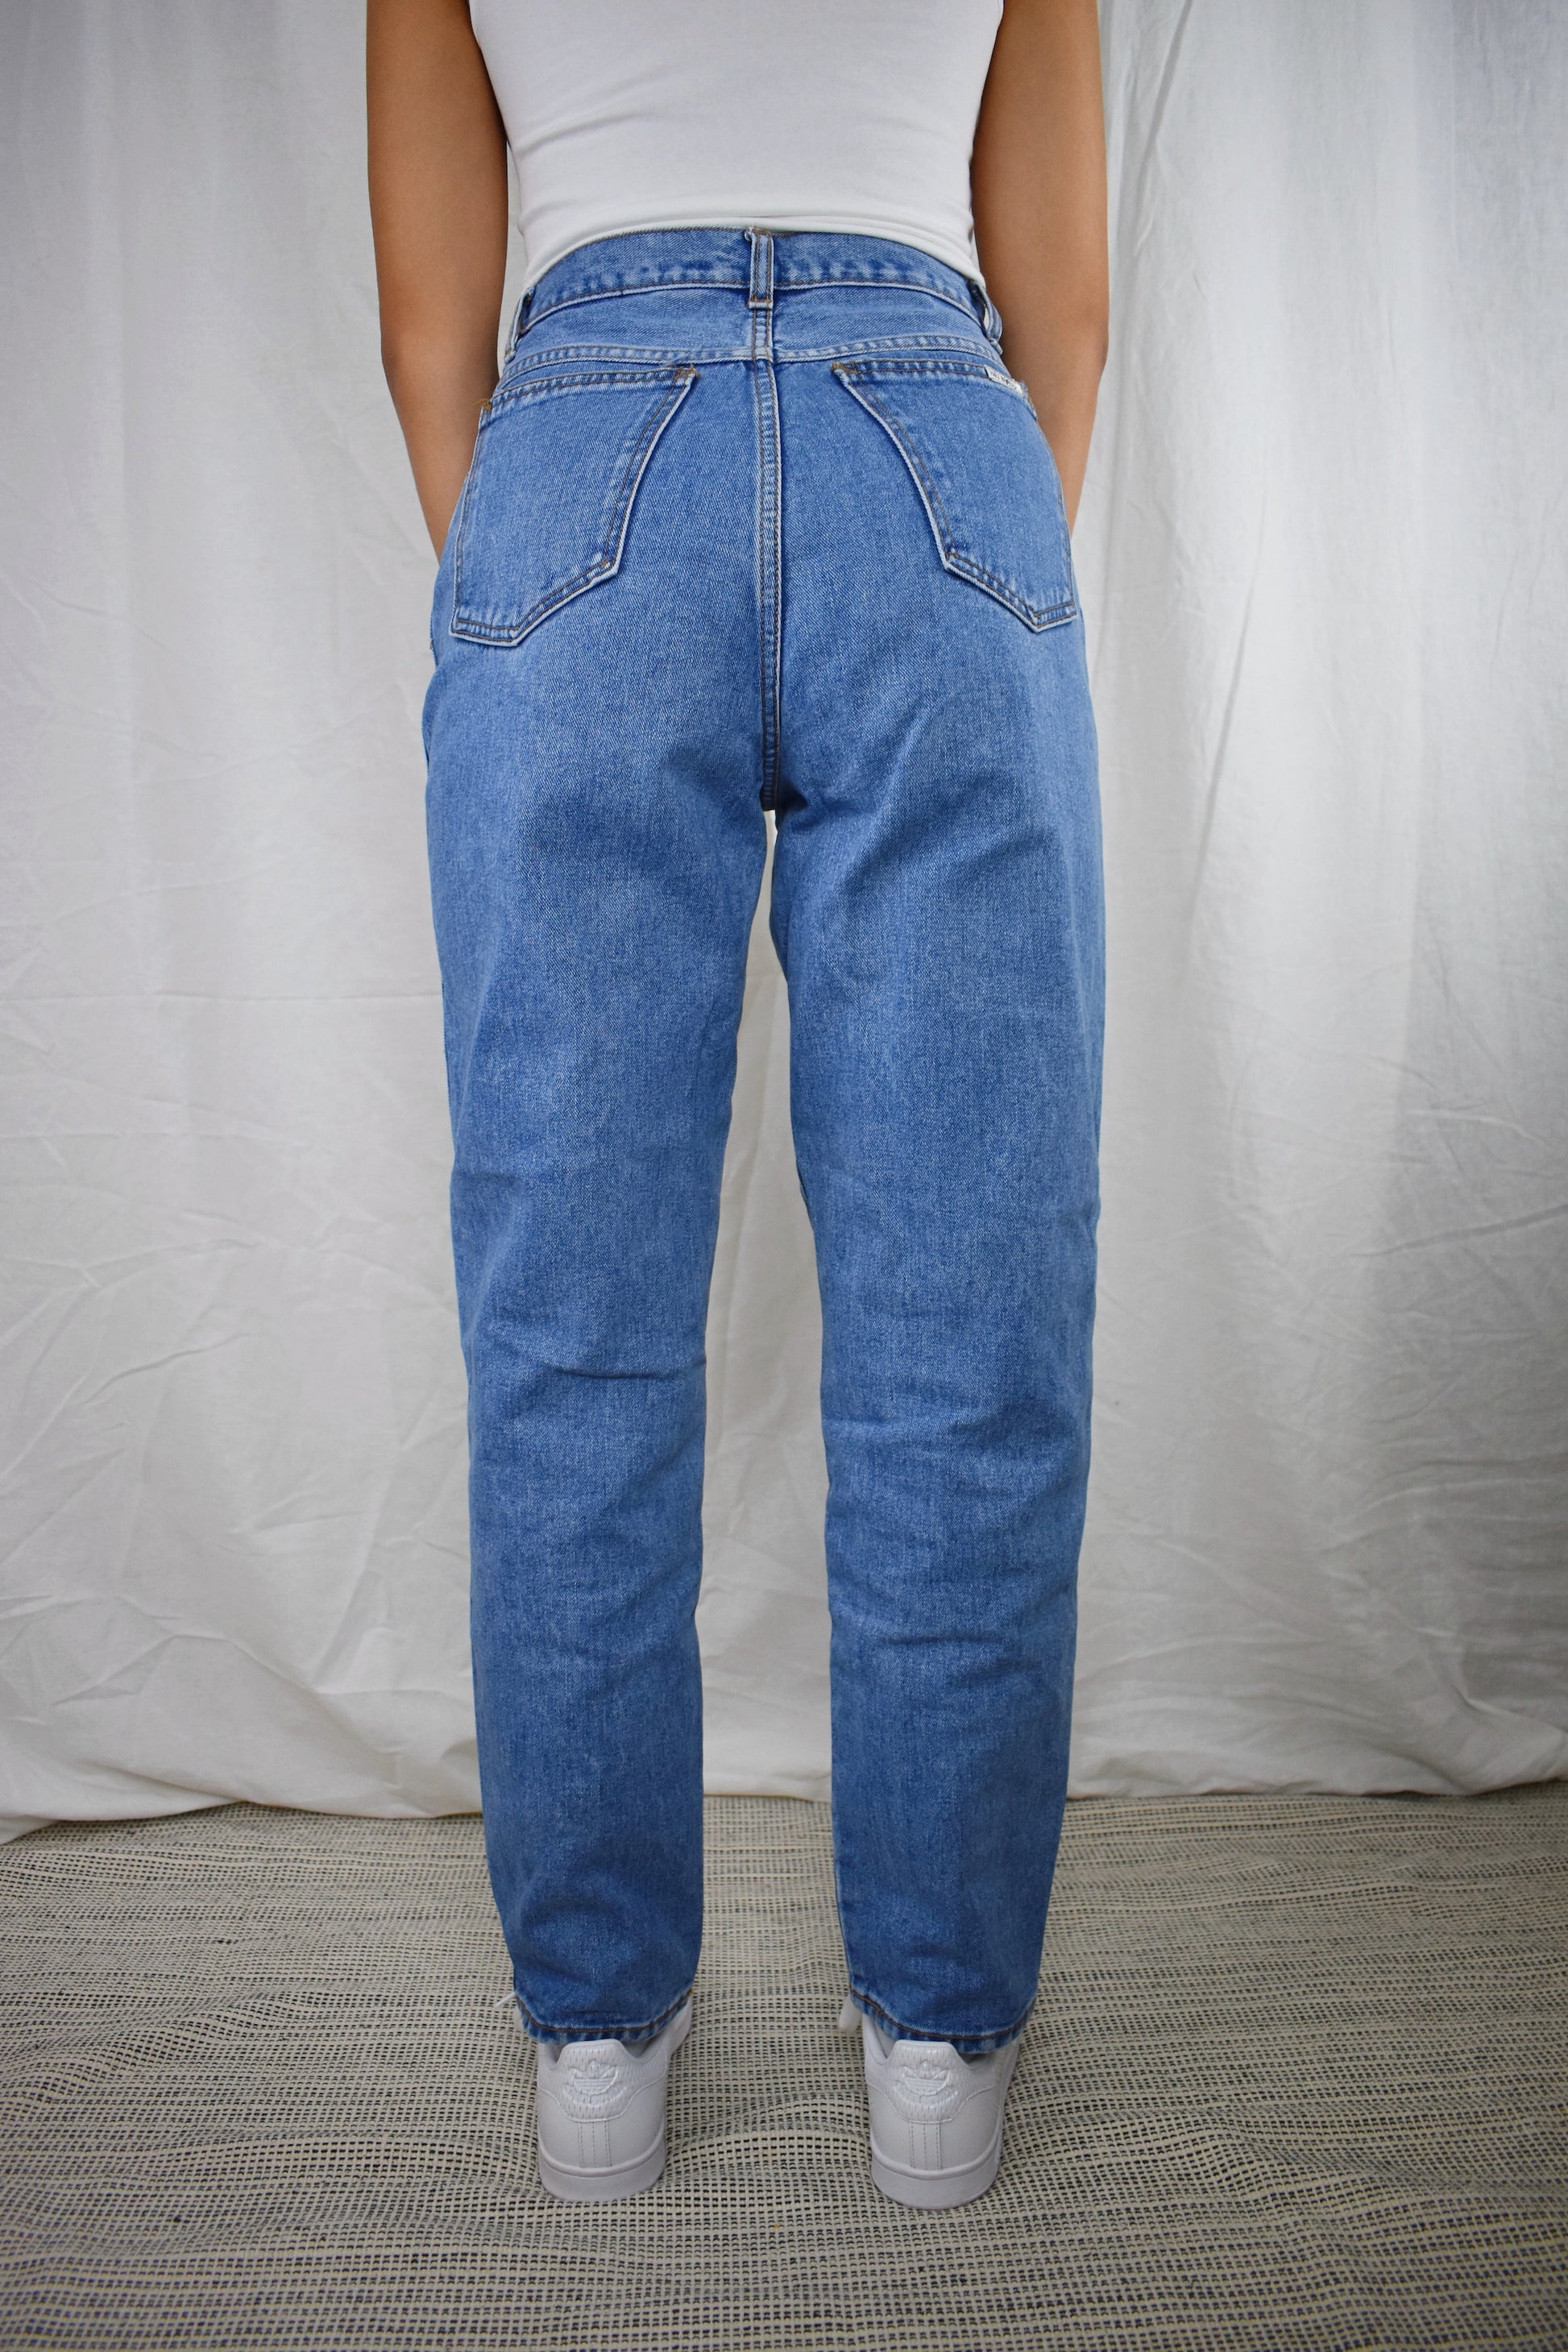 Bill Blass vintage light wash high waisted jeans